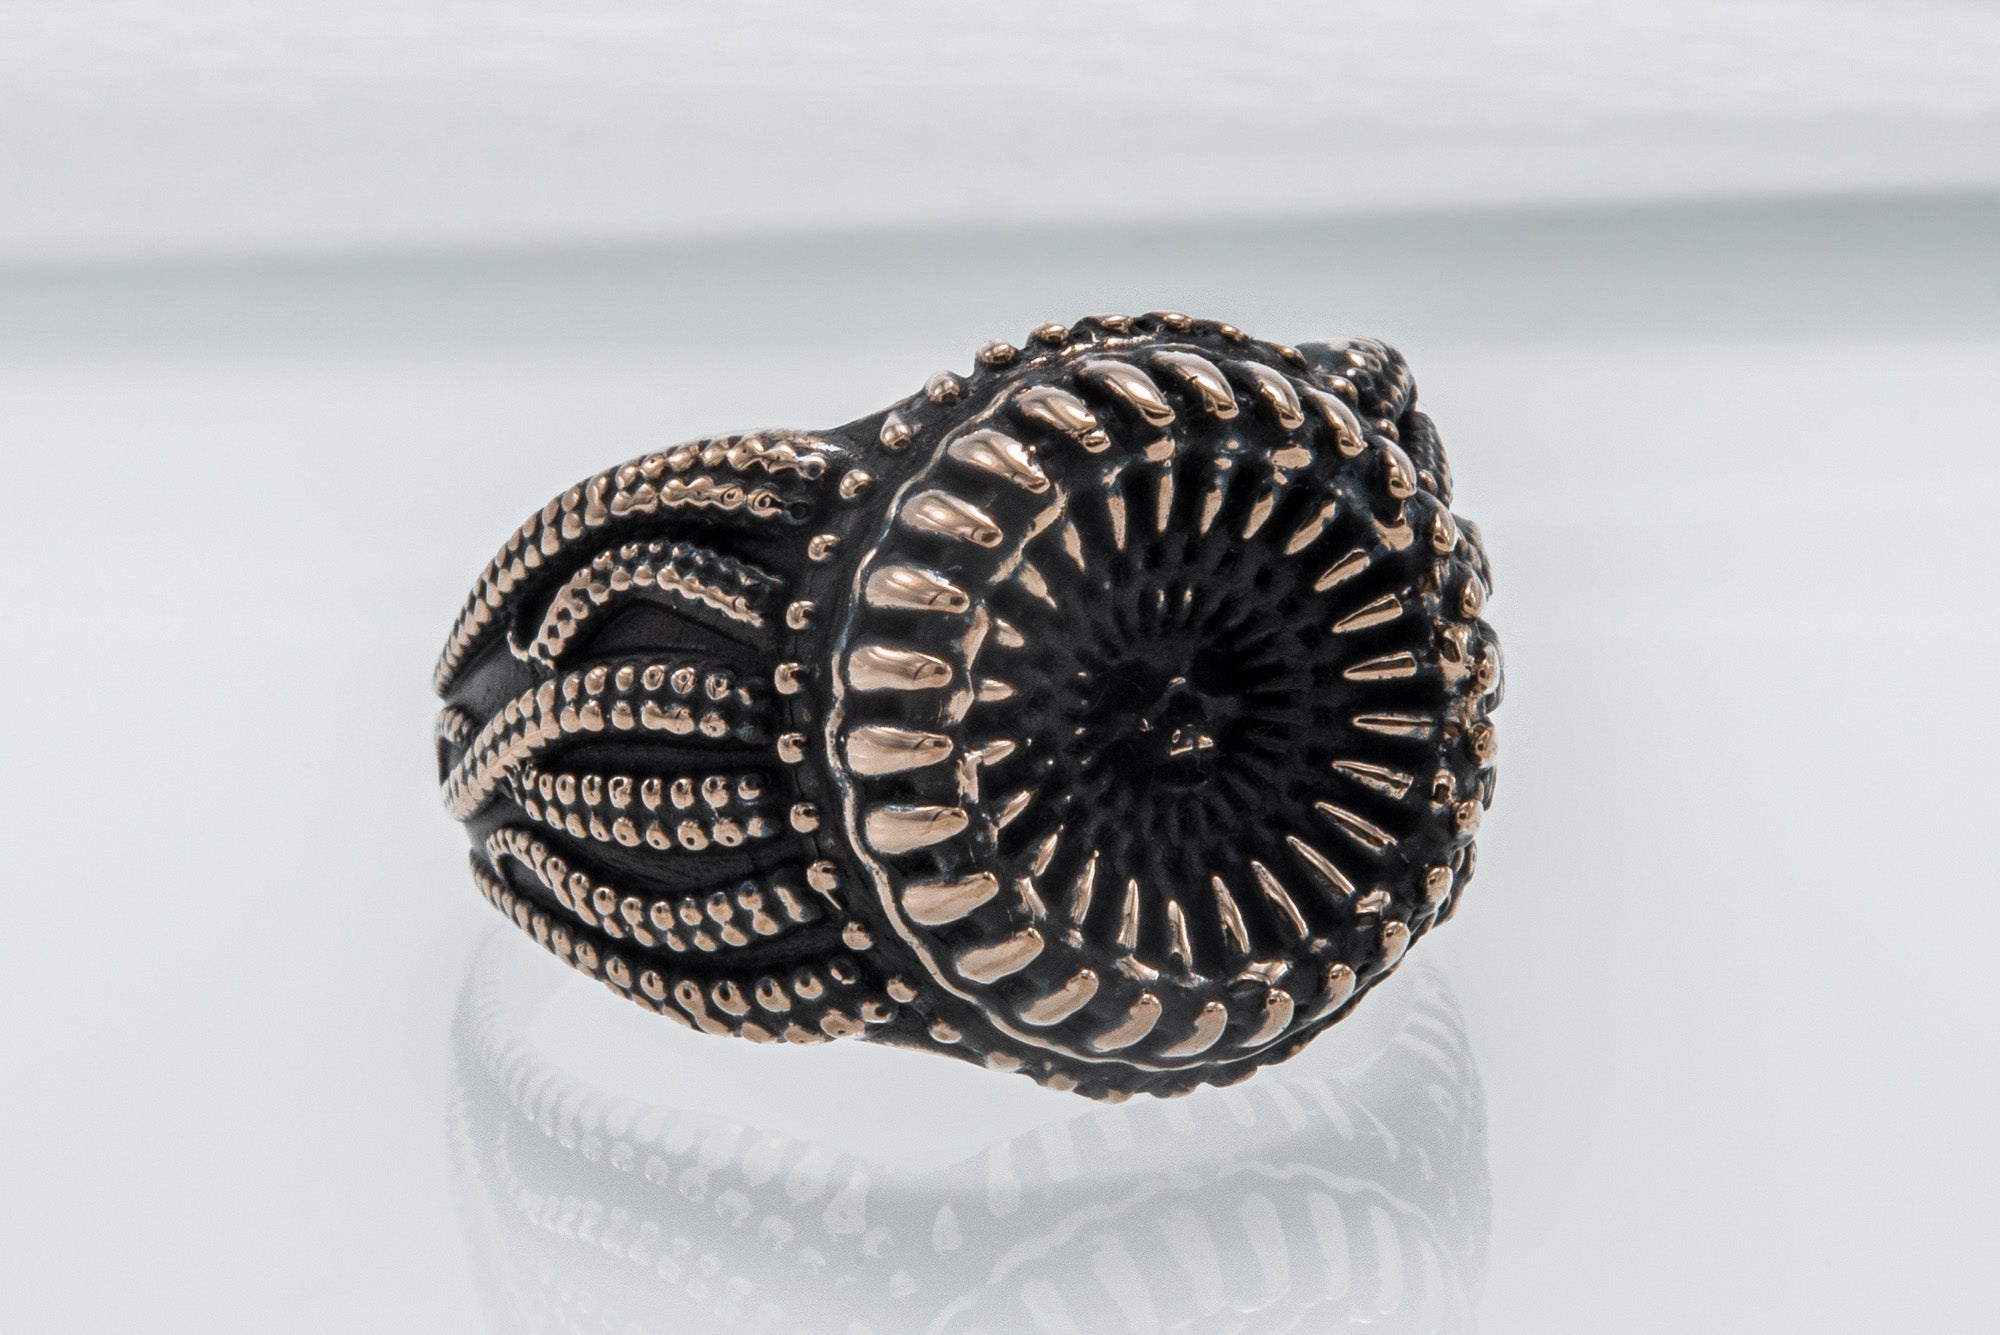 Kraken Ring with Skull Bronze Handmade Unique Jewelry - vikingworkshop